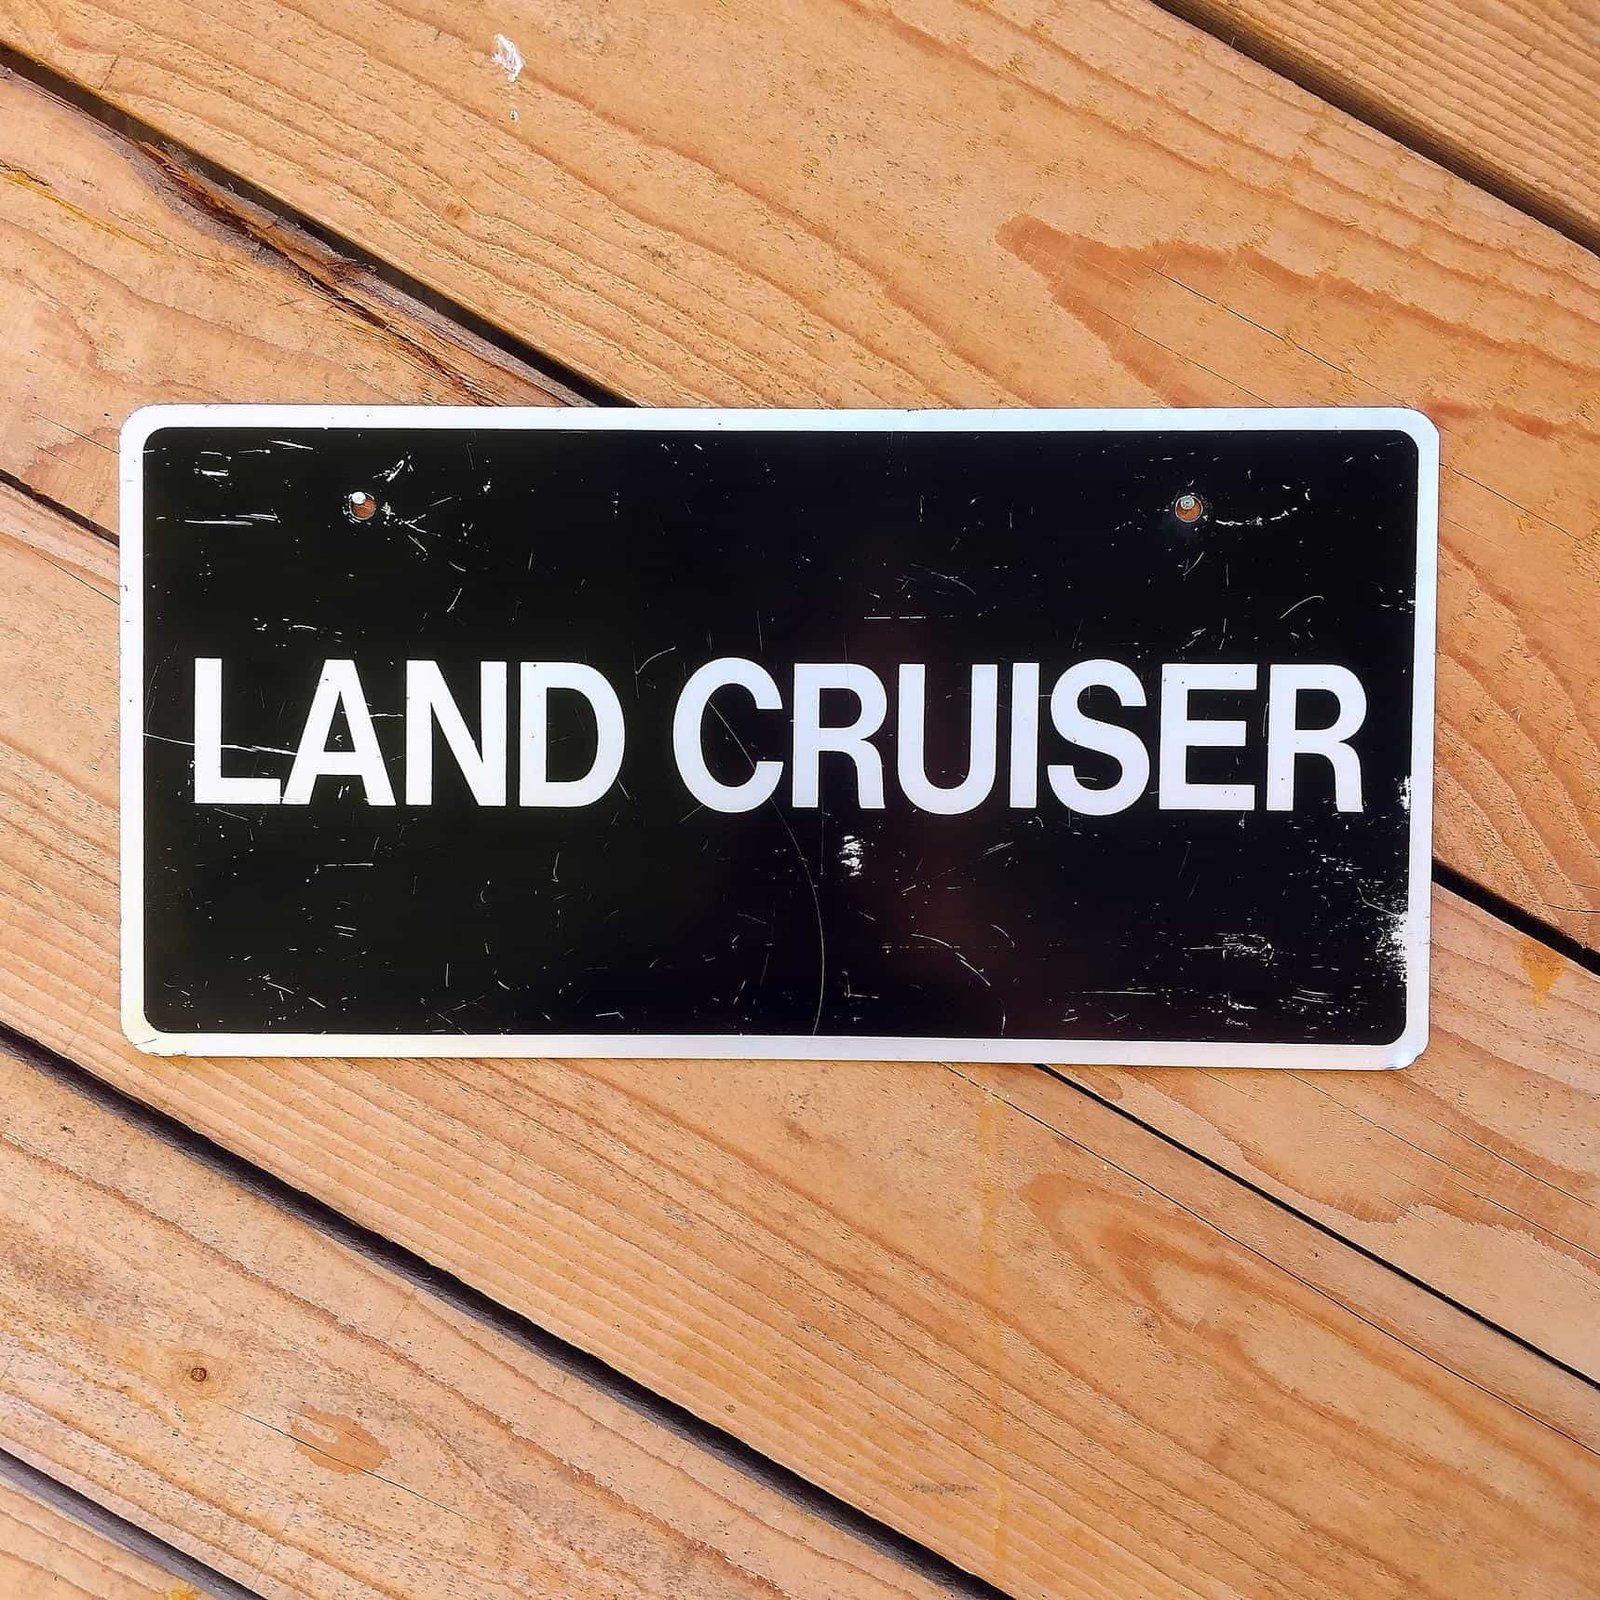 Old plate "Land Cruiser"